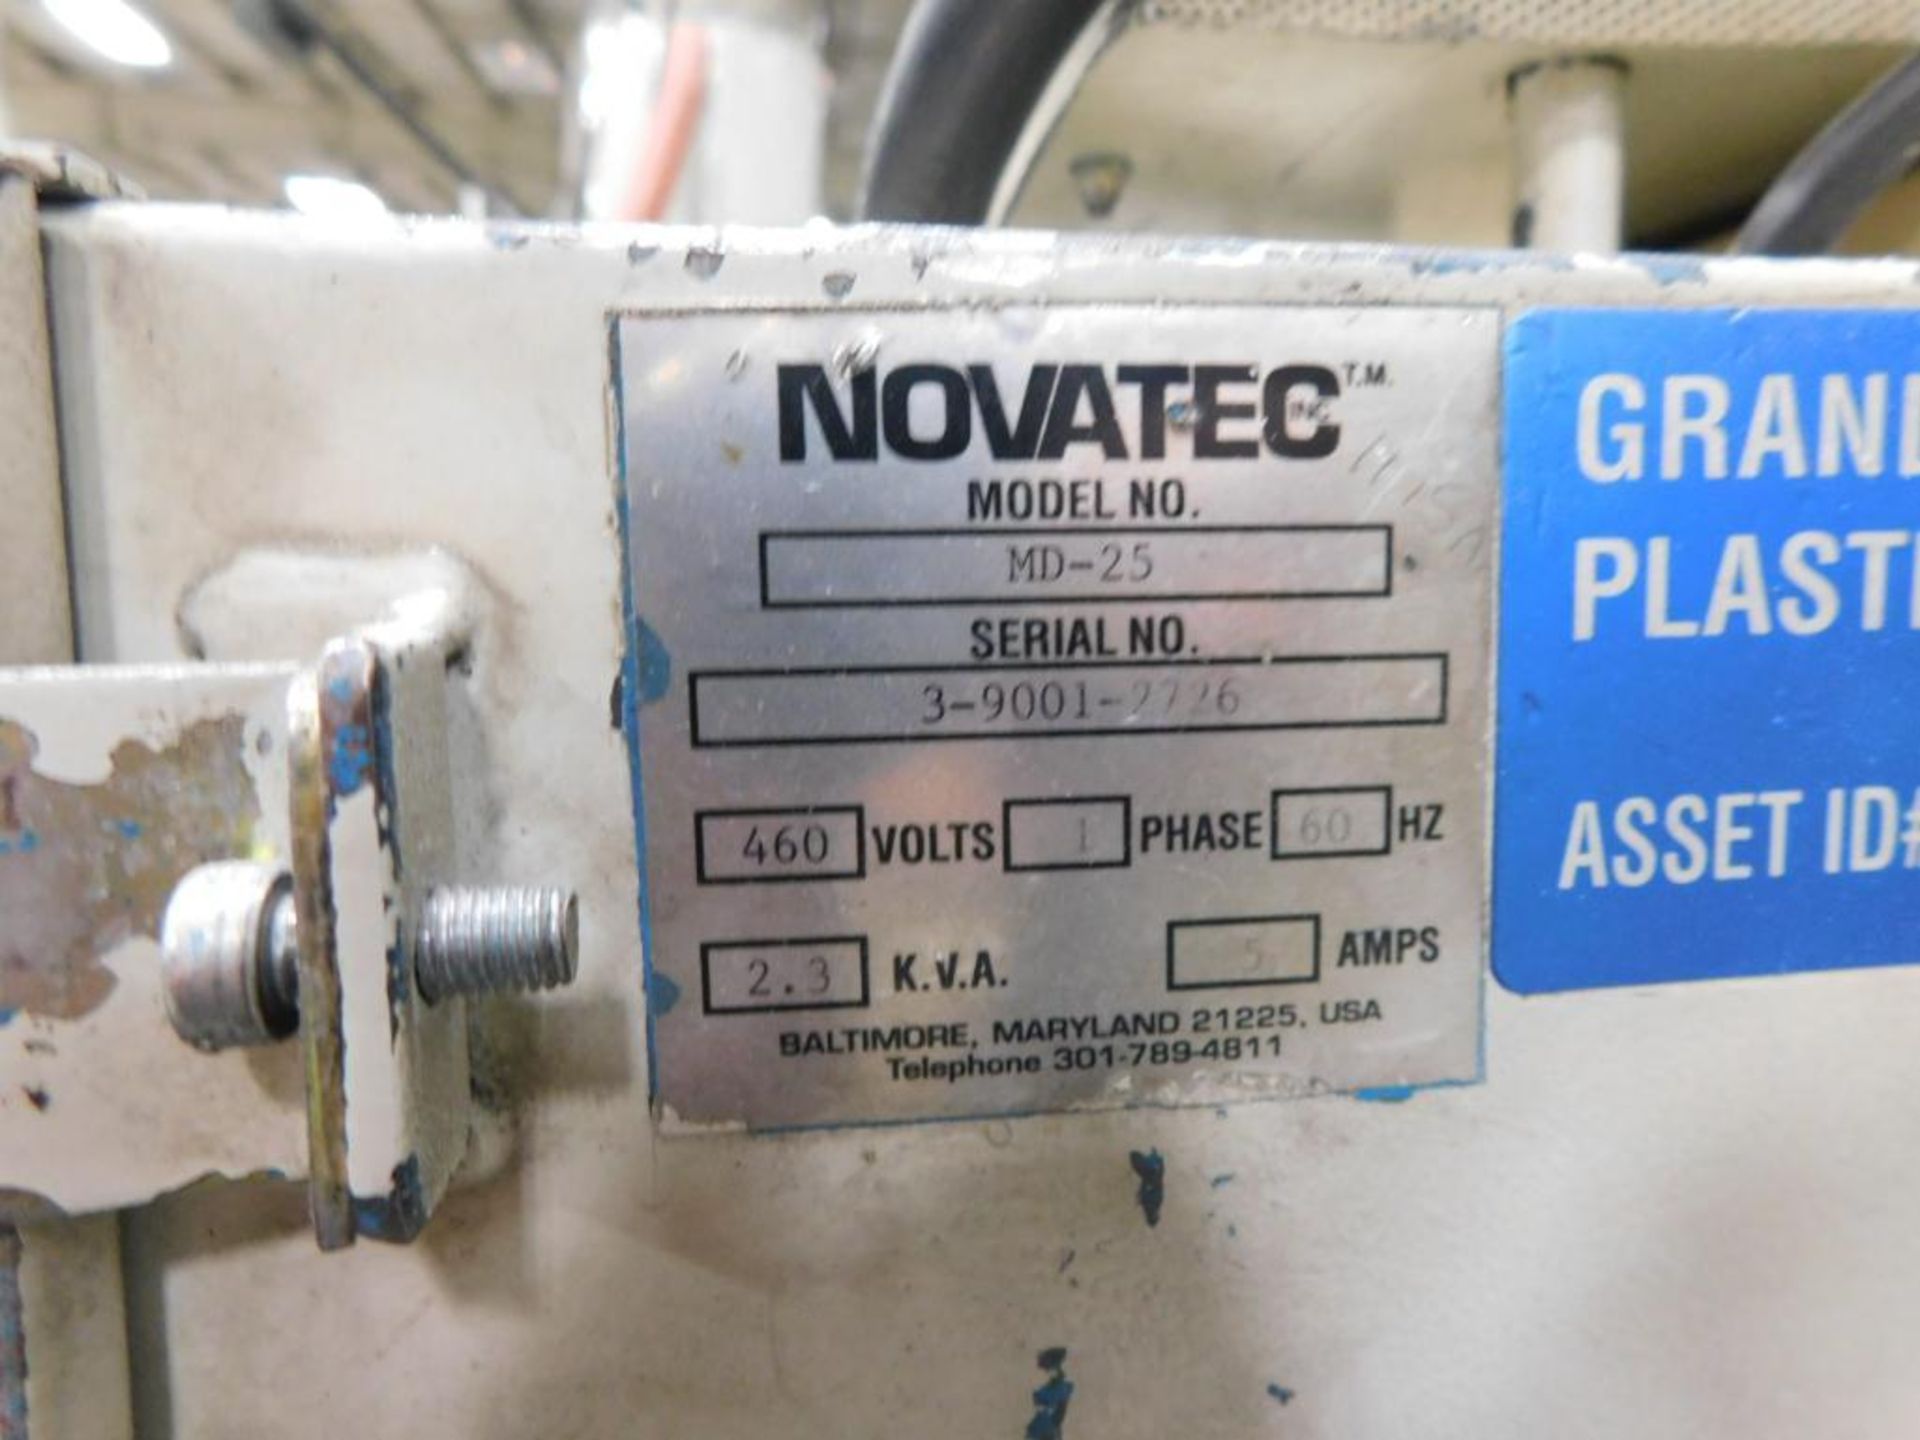 Novatec MB-25 100 Lb. Portable Material Dryer, S/N 3-9001-2726 - Image 5 of 5